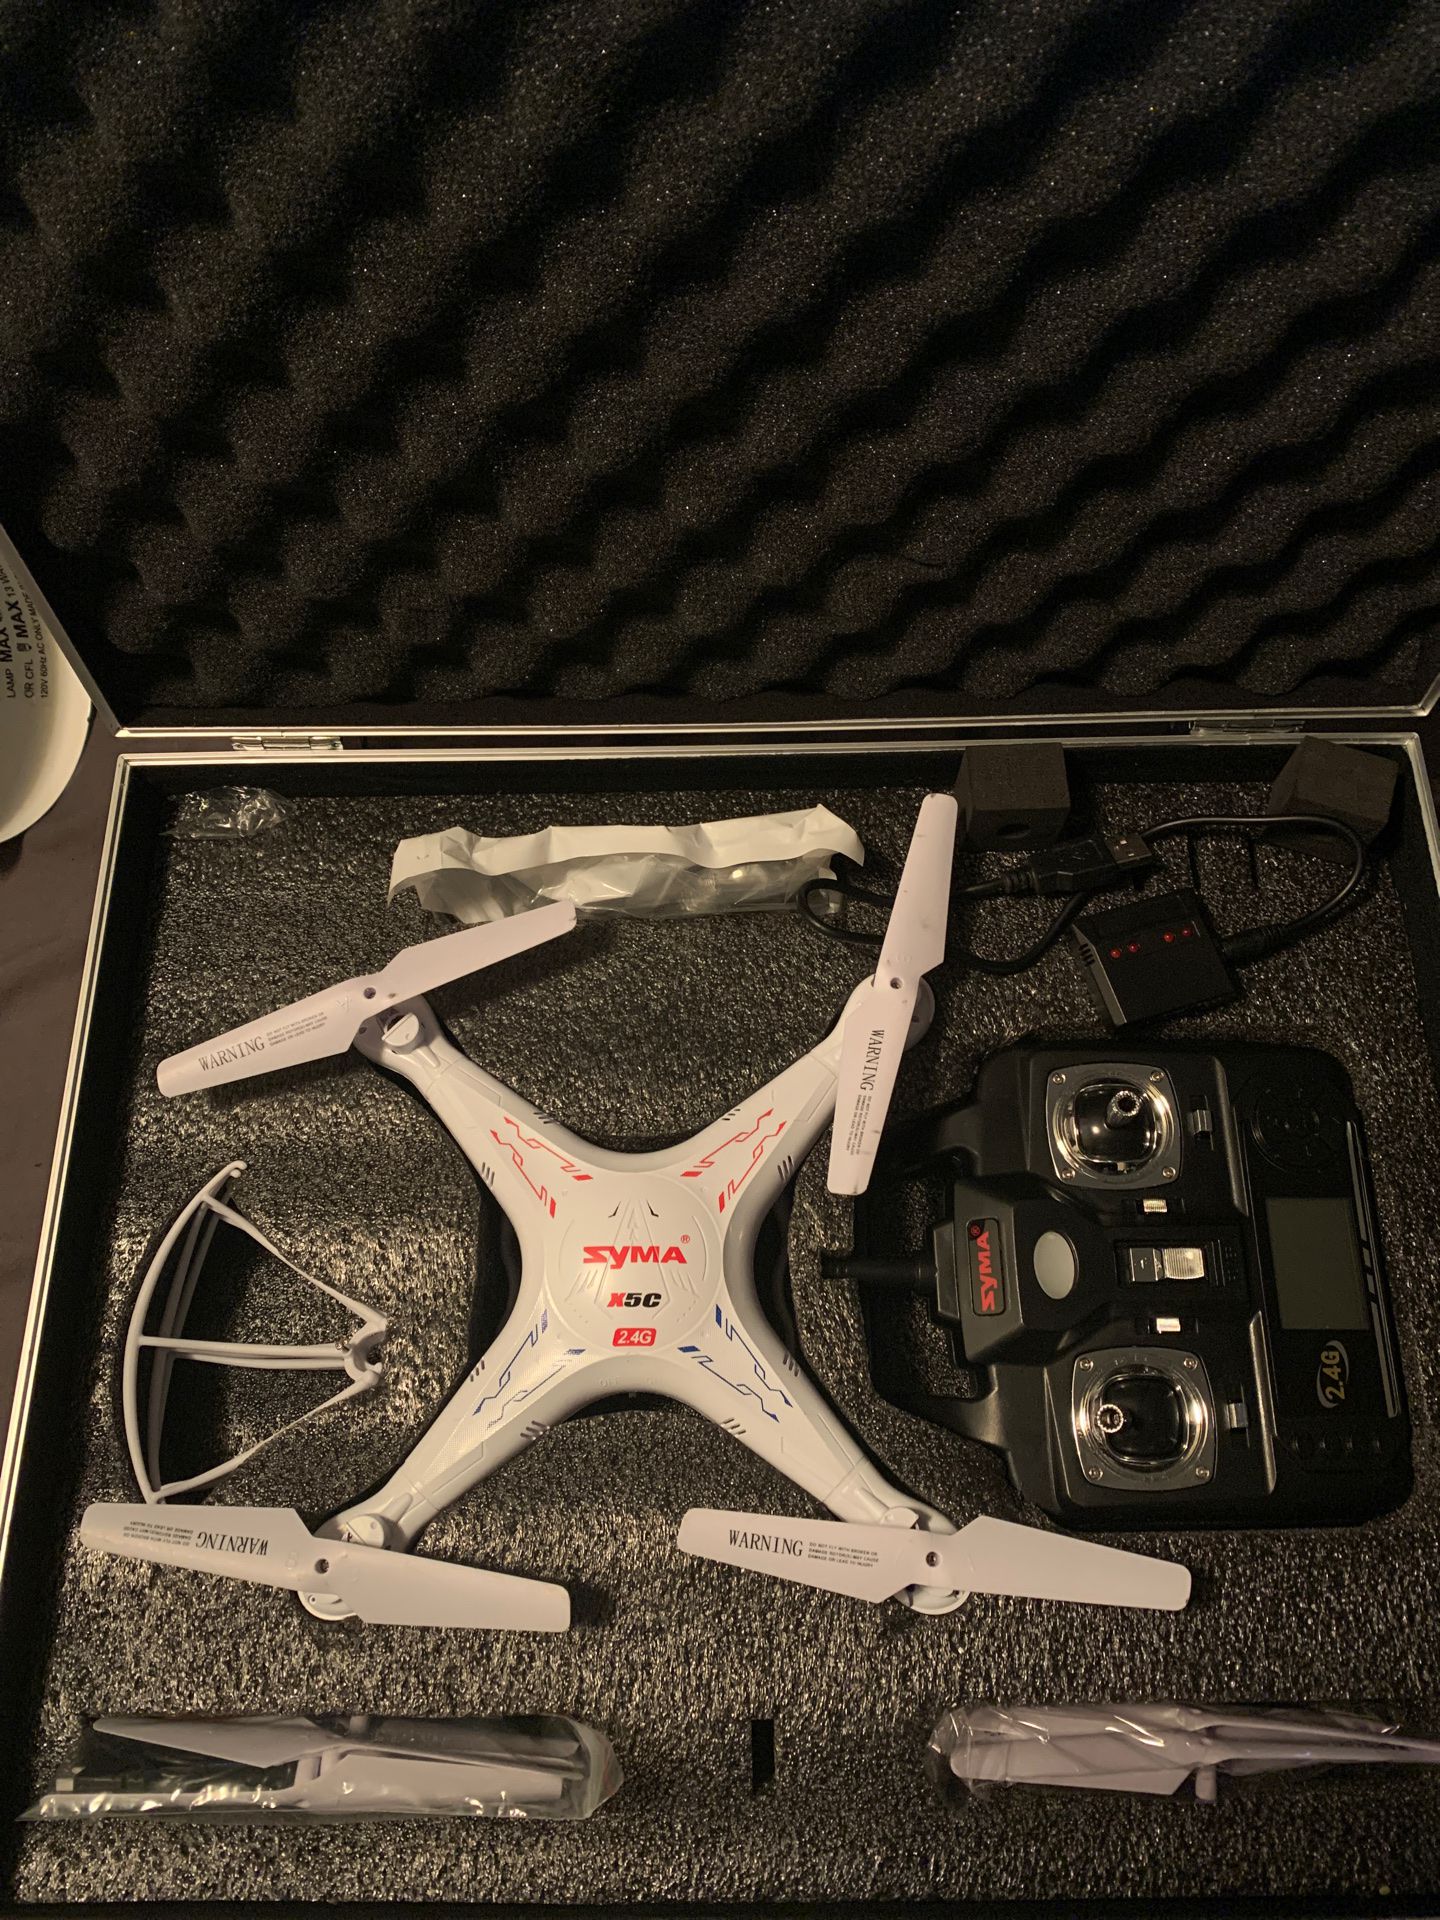 Brand new SYMA drone with camera